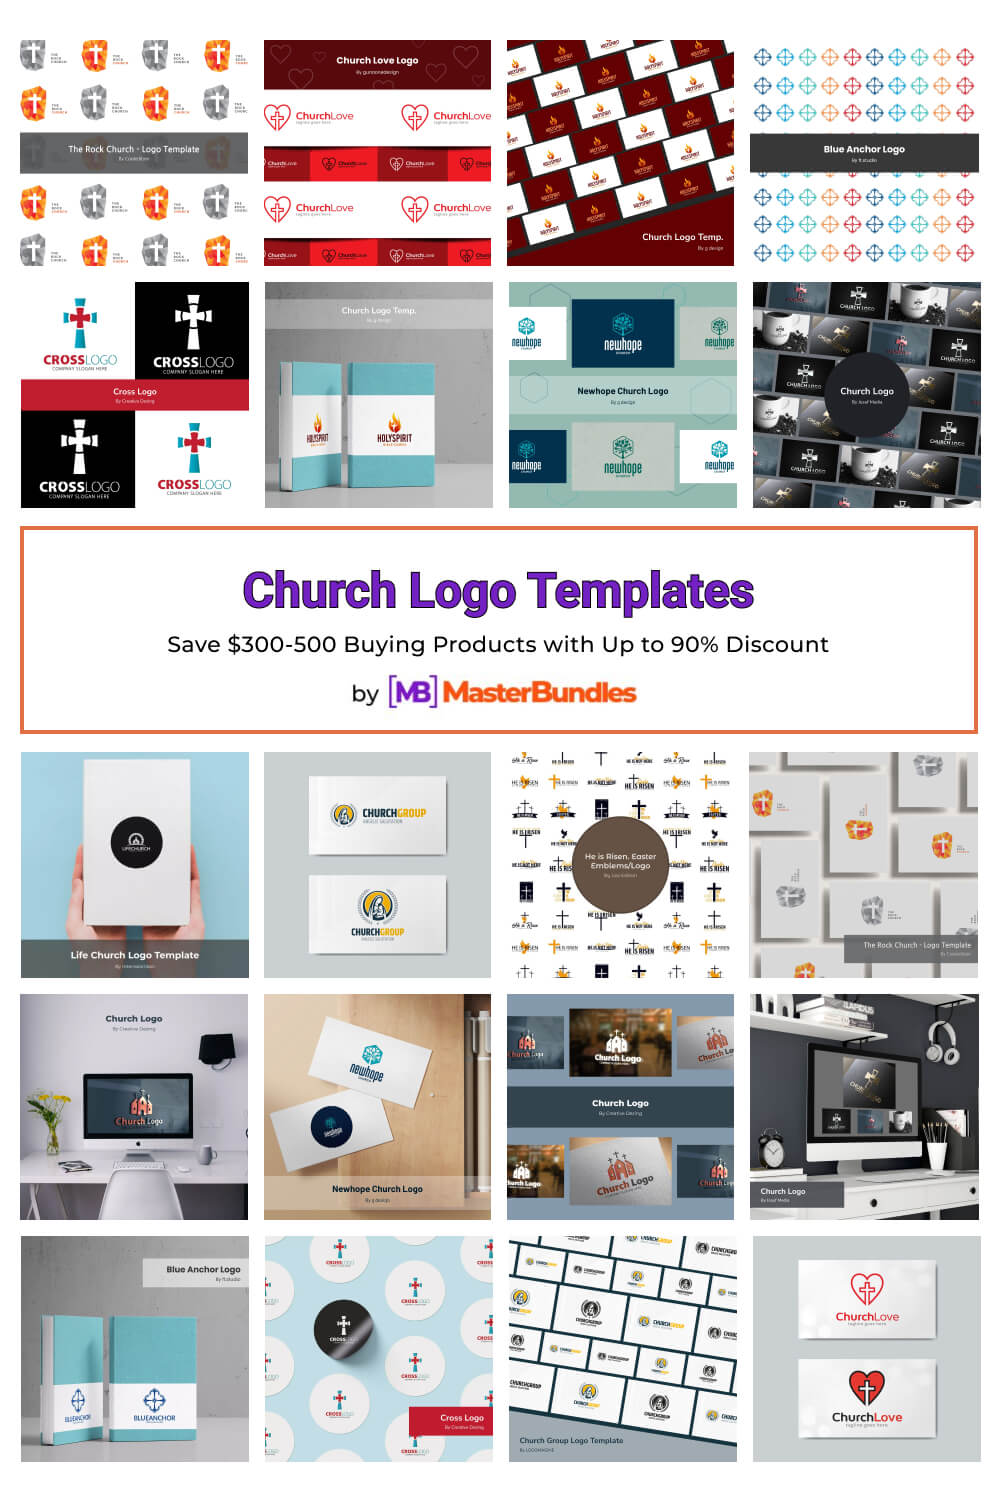 church logo templates pinterest image.